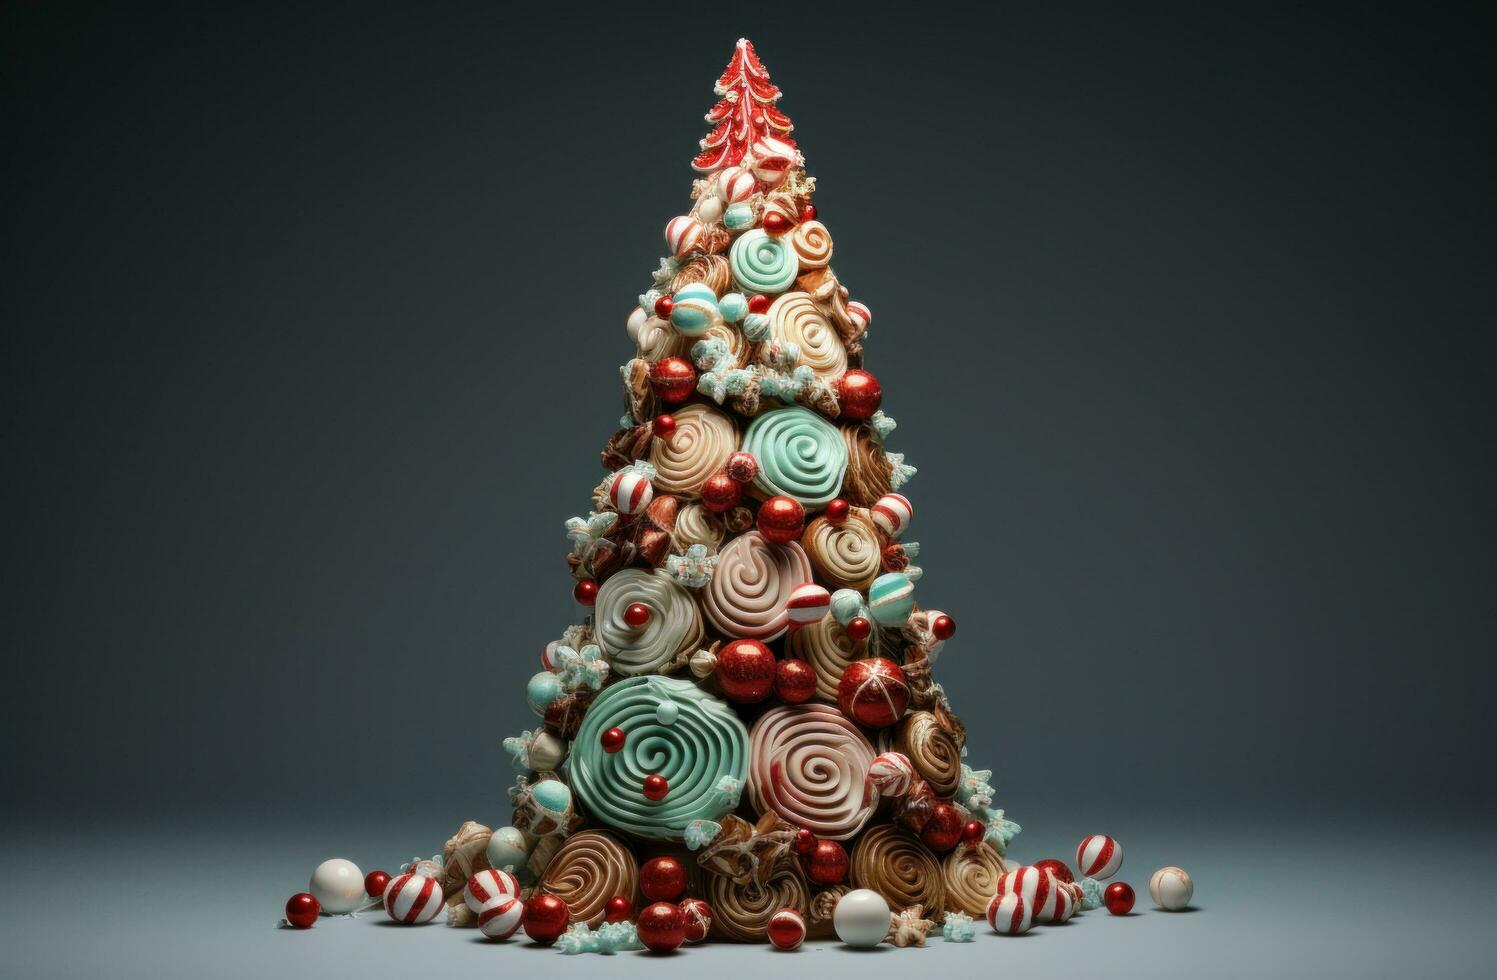 ai gegenereerd Kerstmis boom gemaakt van snoep en kruiden, foto